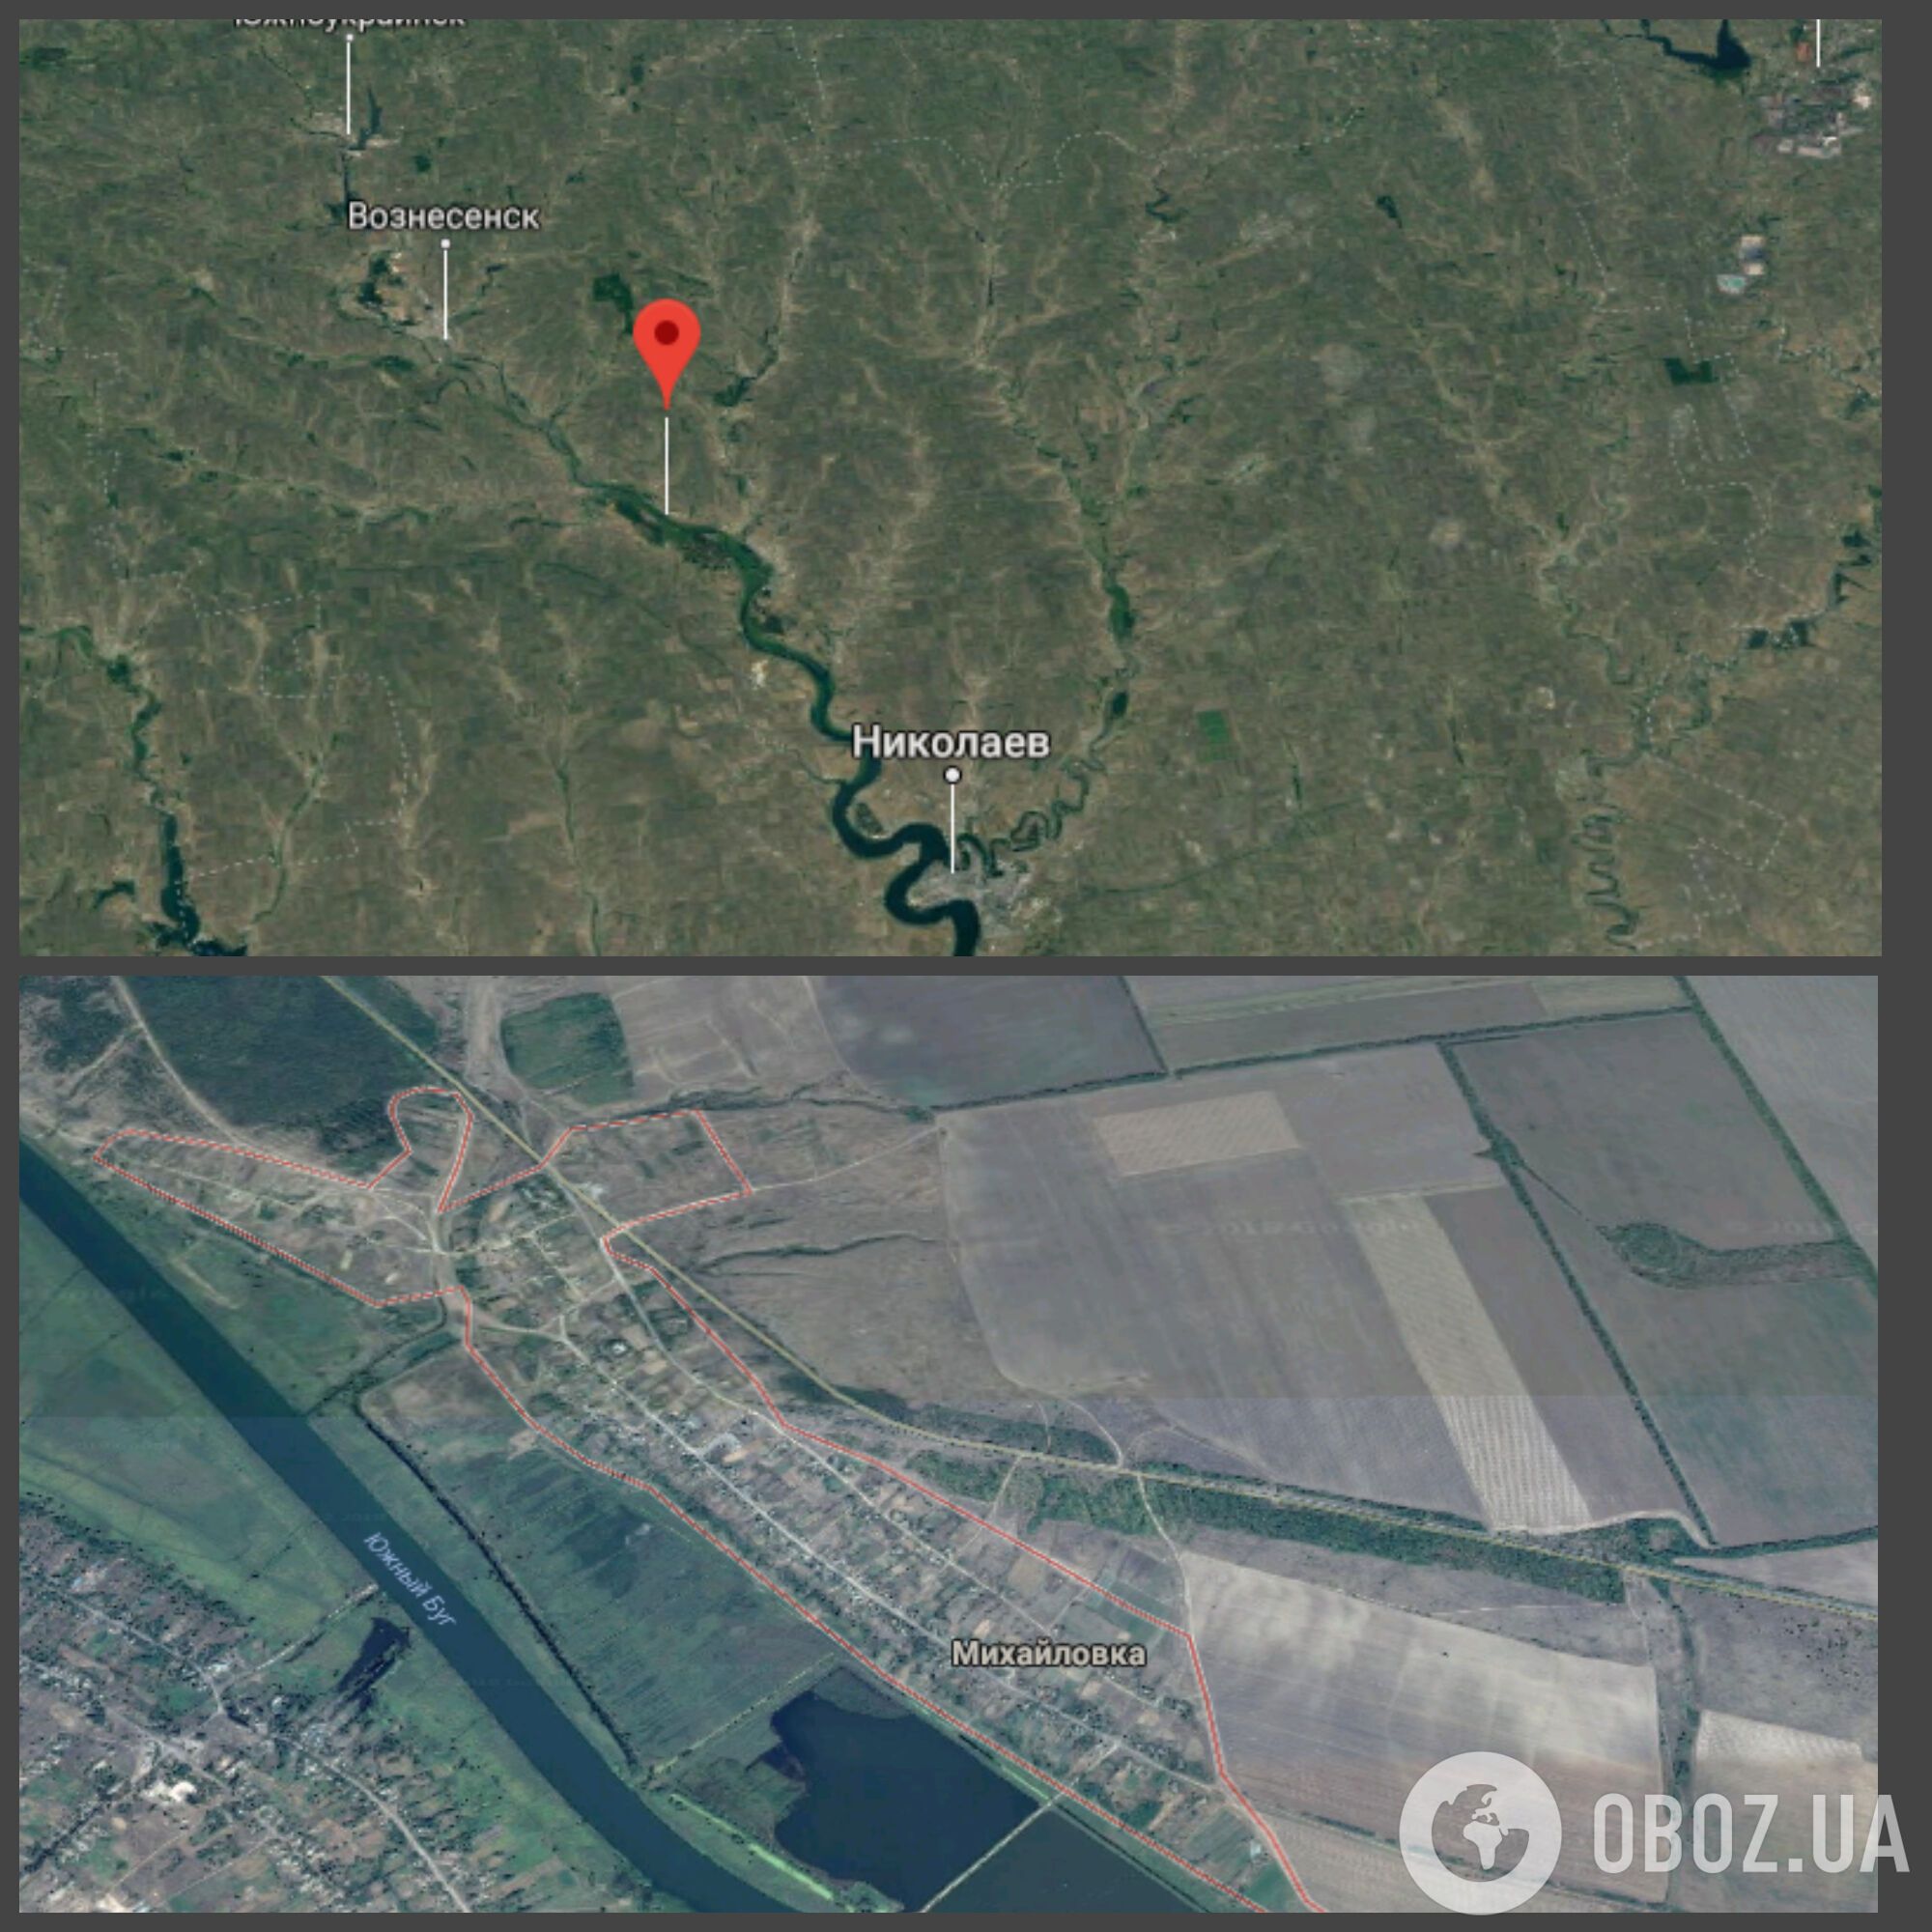 ДТП произошло на трассе возле села Михайловка